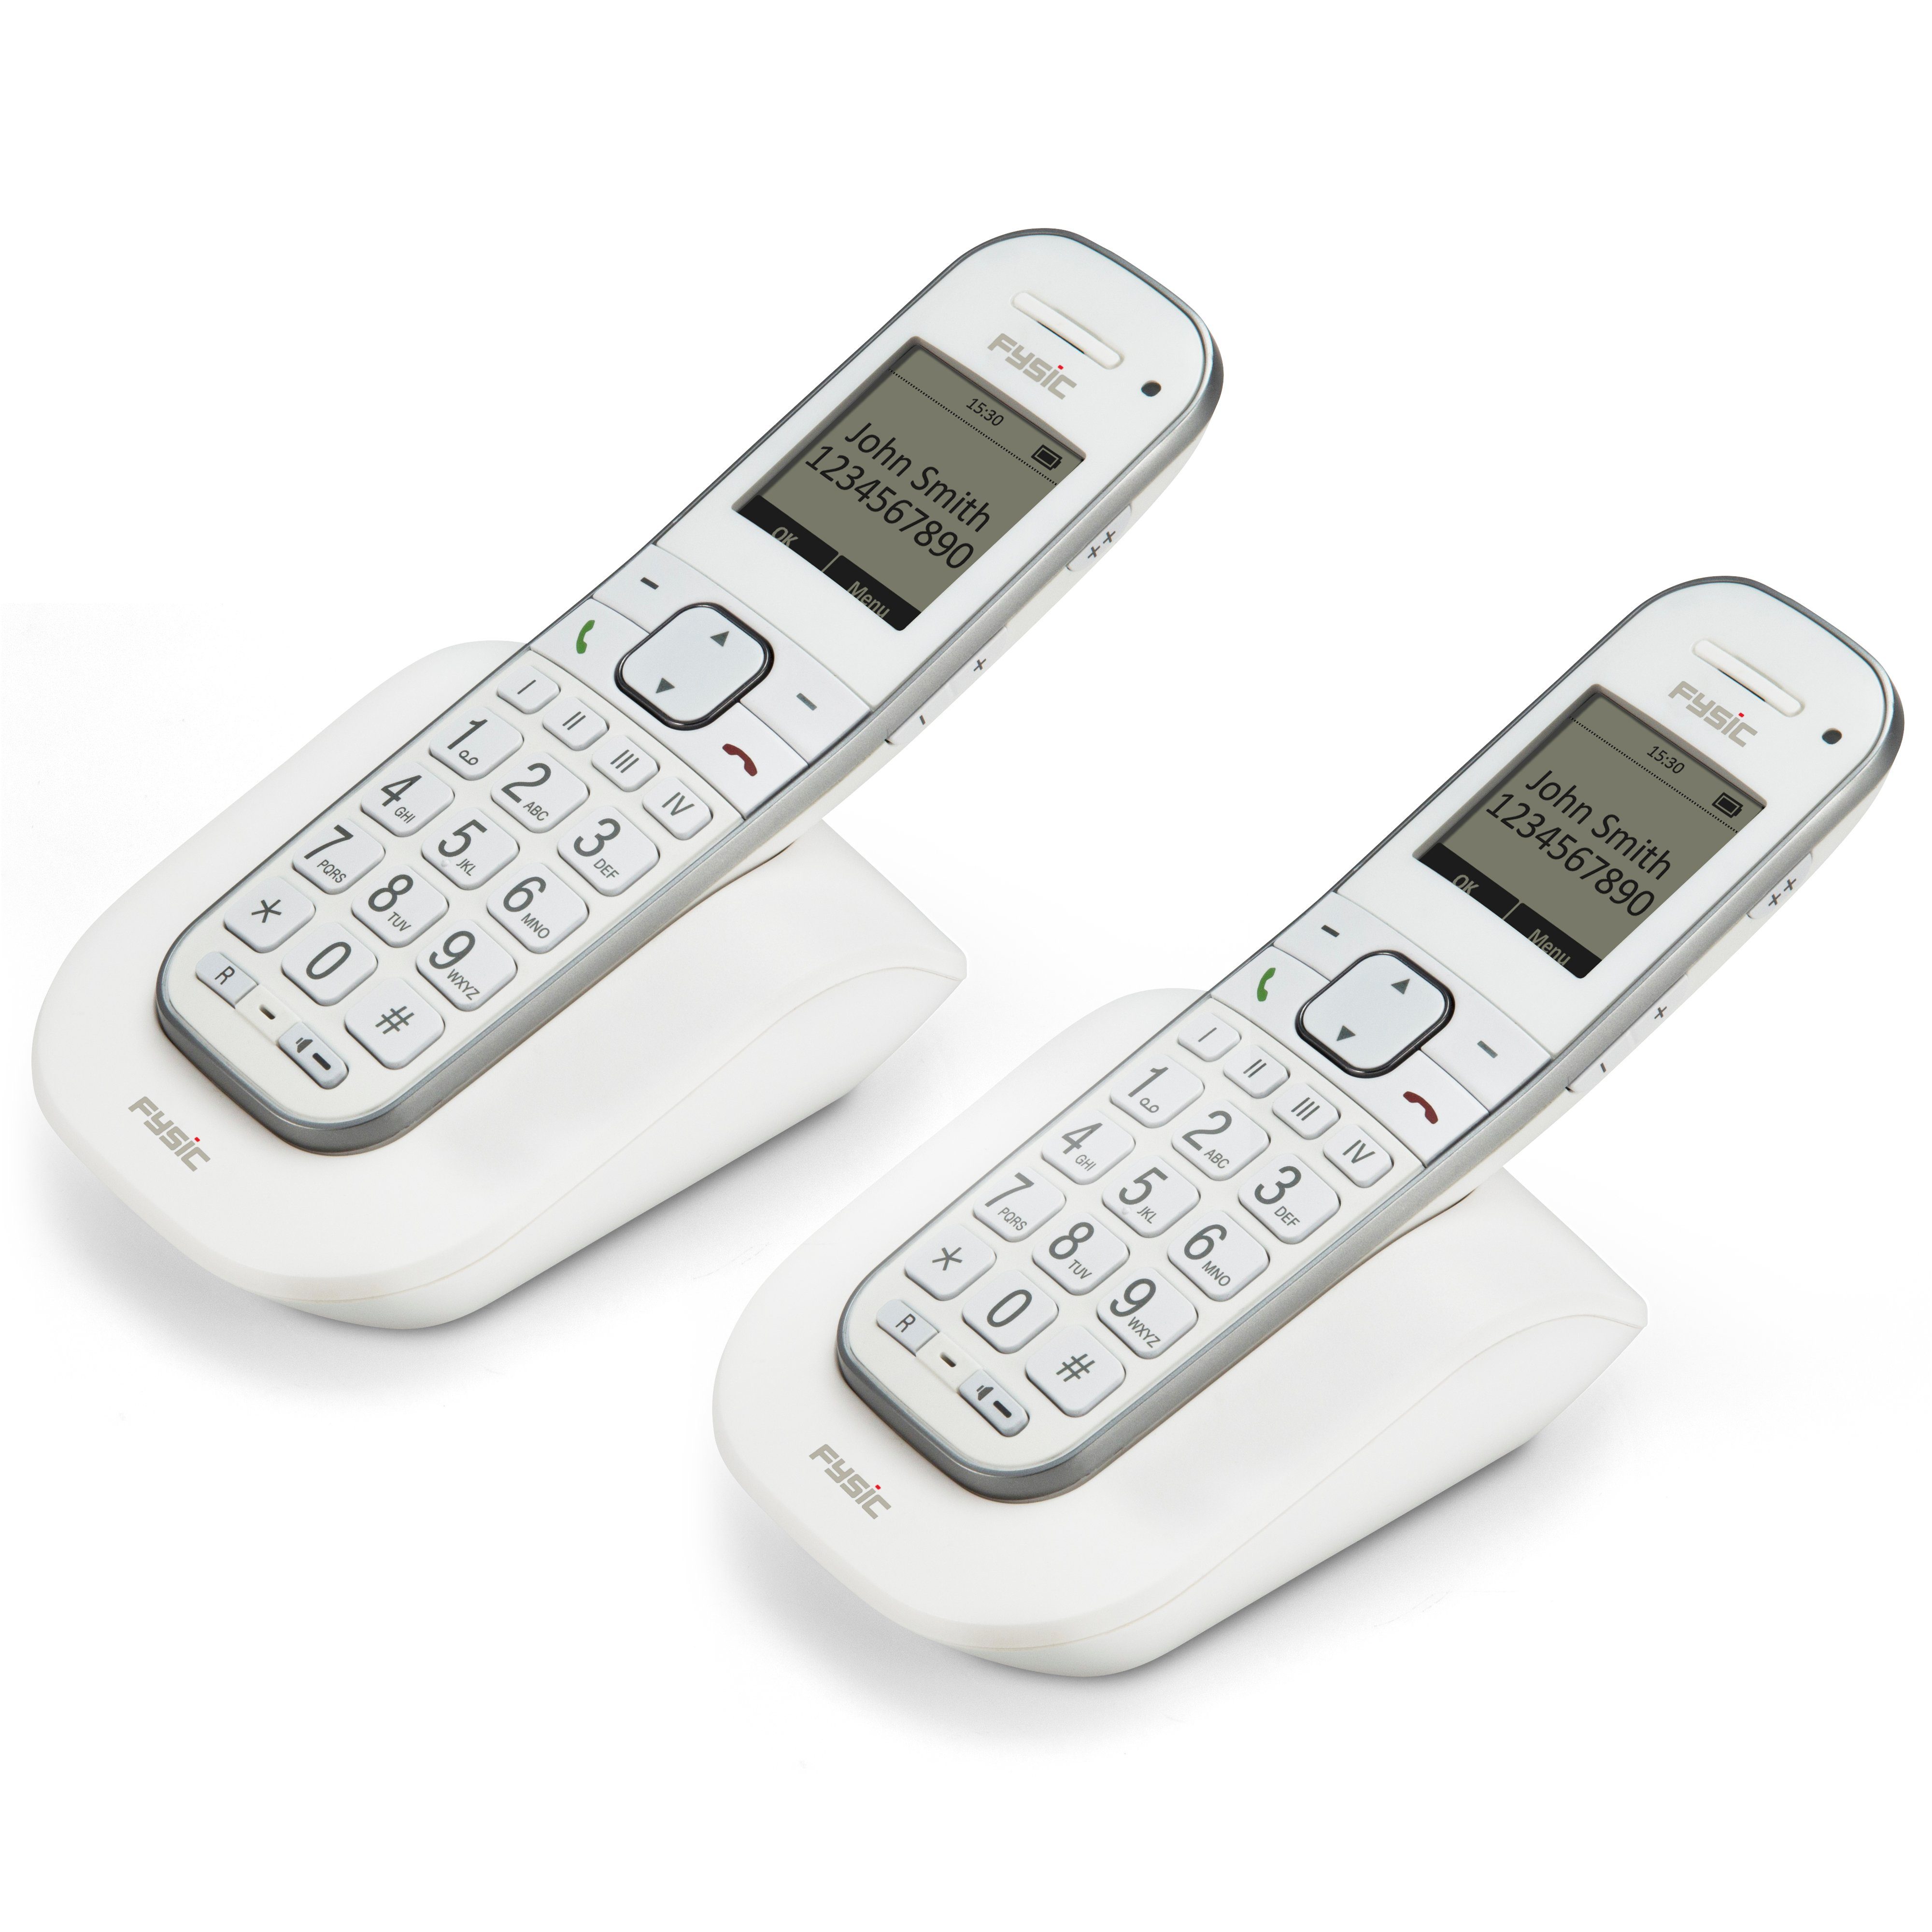 Fysic FX-9000 DUO Seniorentelefon (Mobilteile: Seniorentelefon schnurloses großen Tasten) mit 2